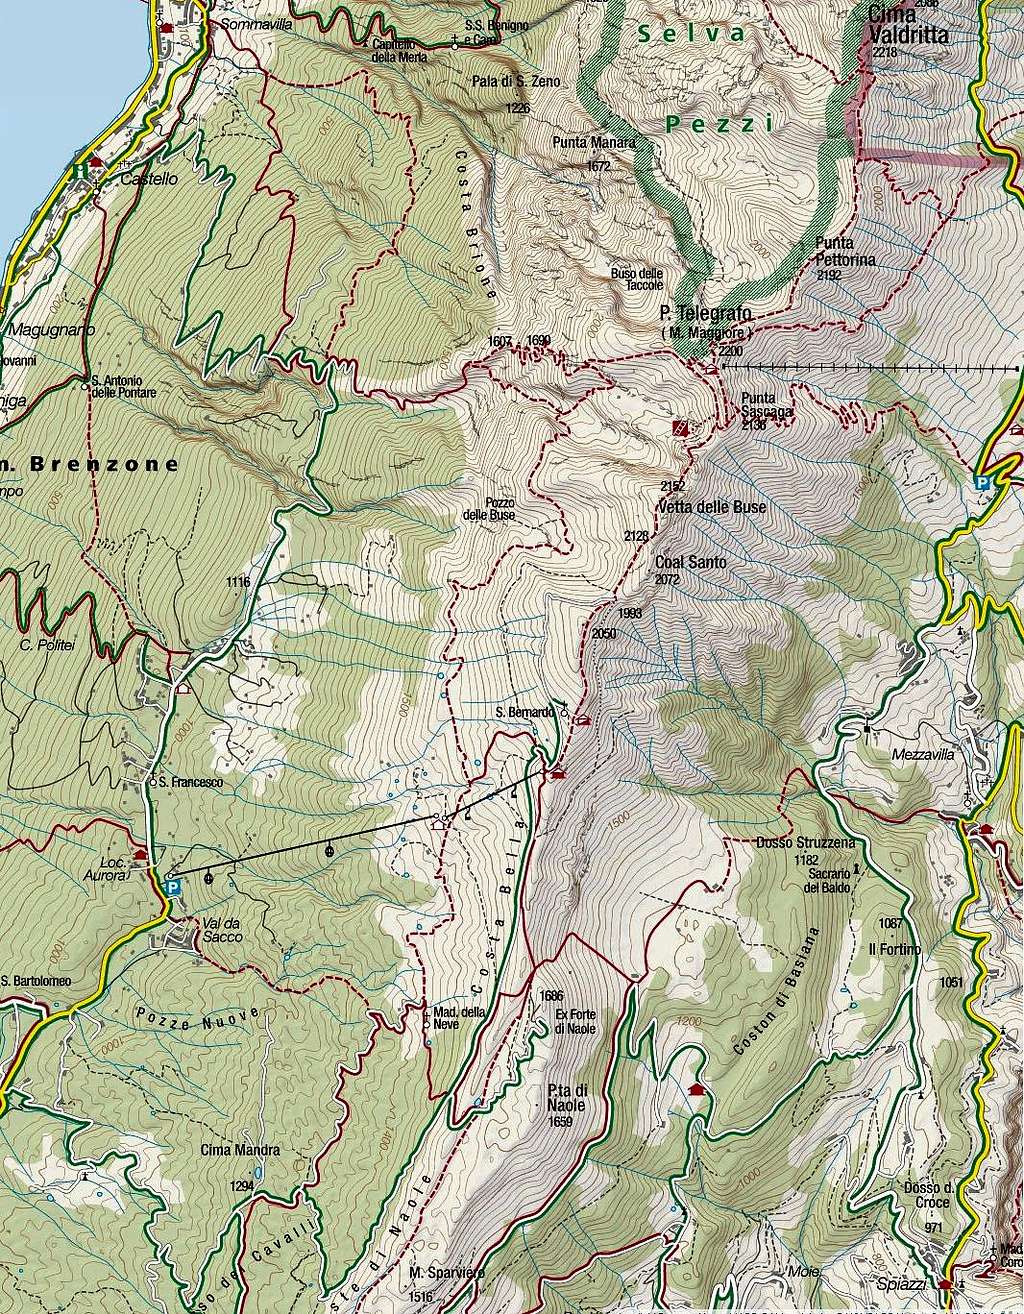 Cima Valdritta map 2